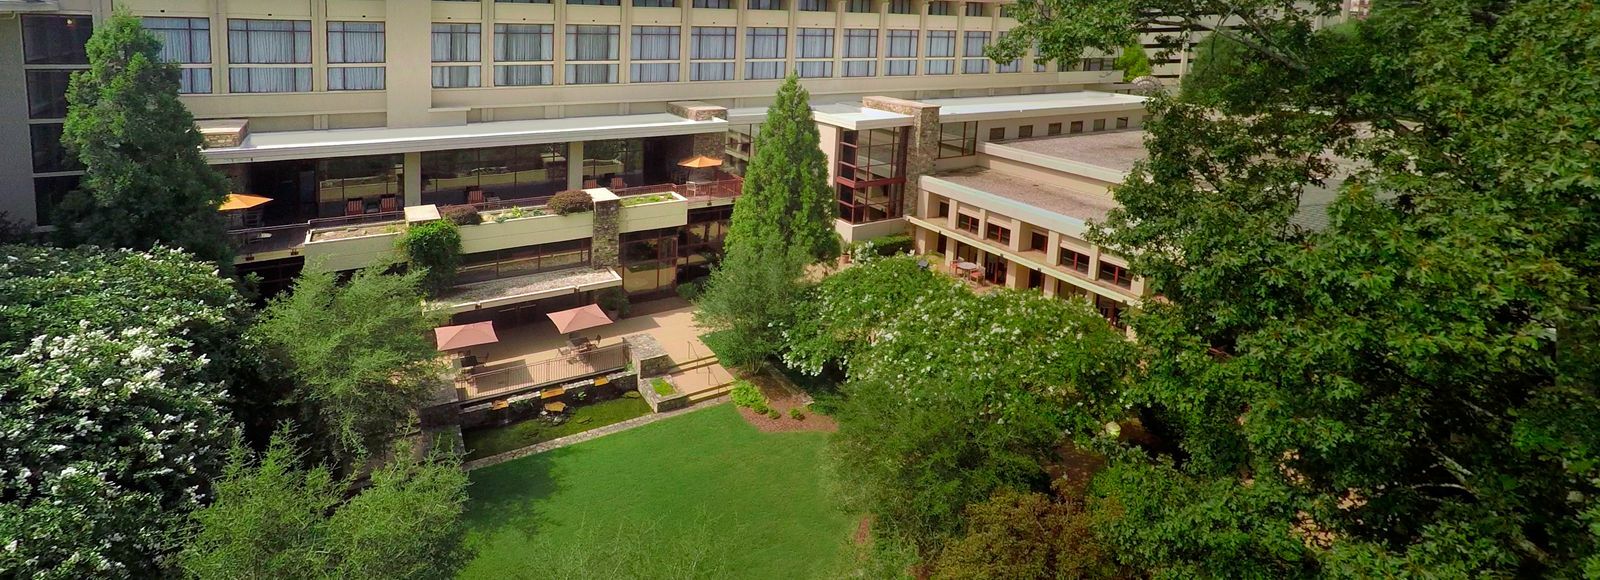 Emory Conference Center Hotel Atlanta Exterior foto